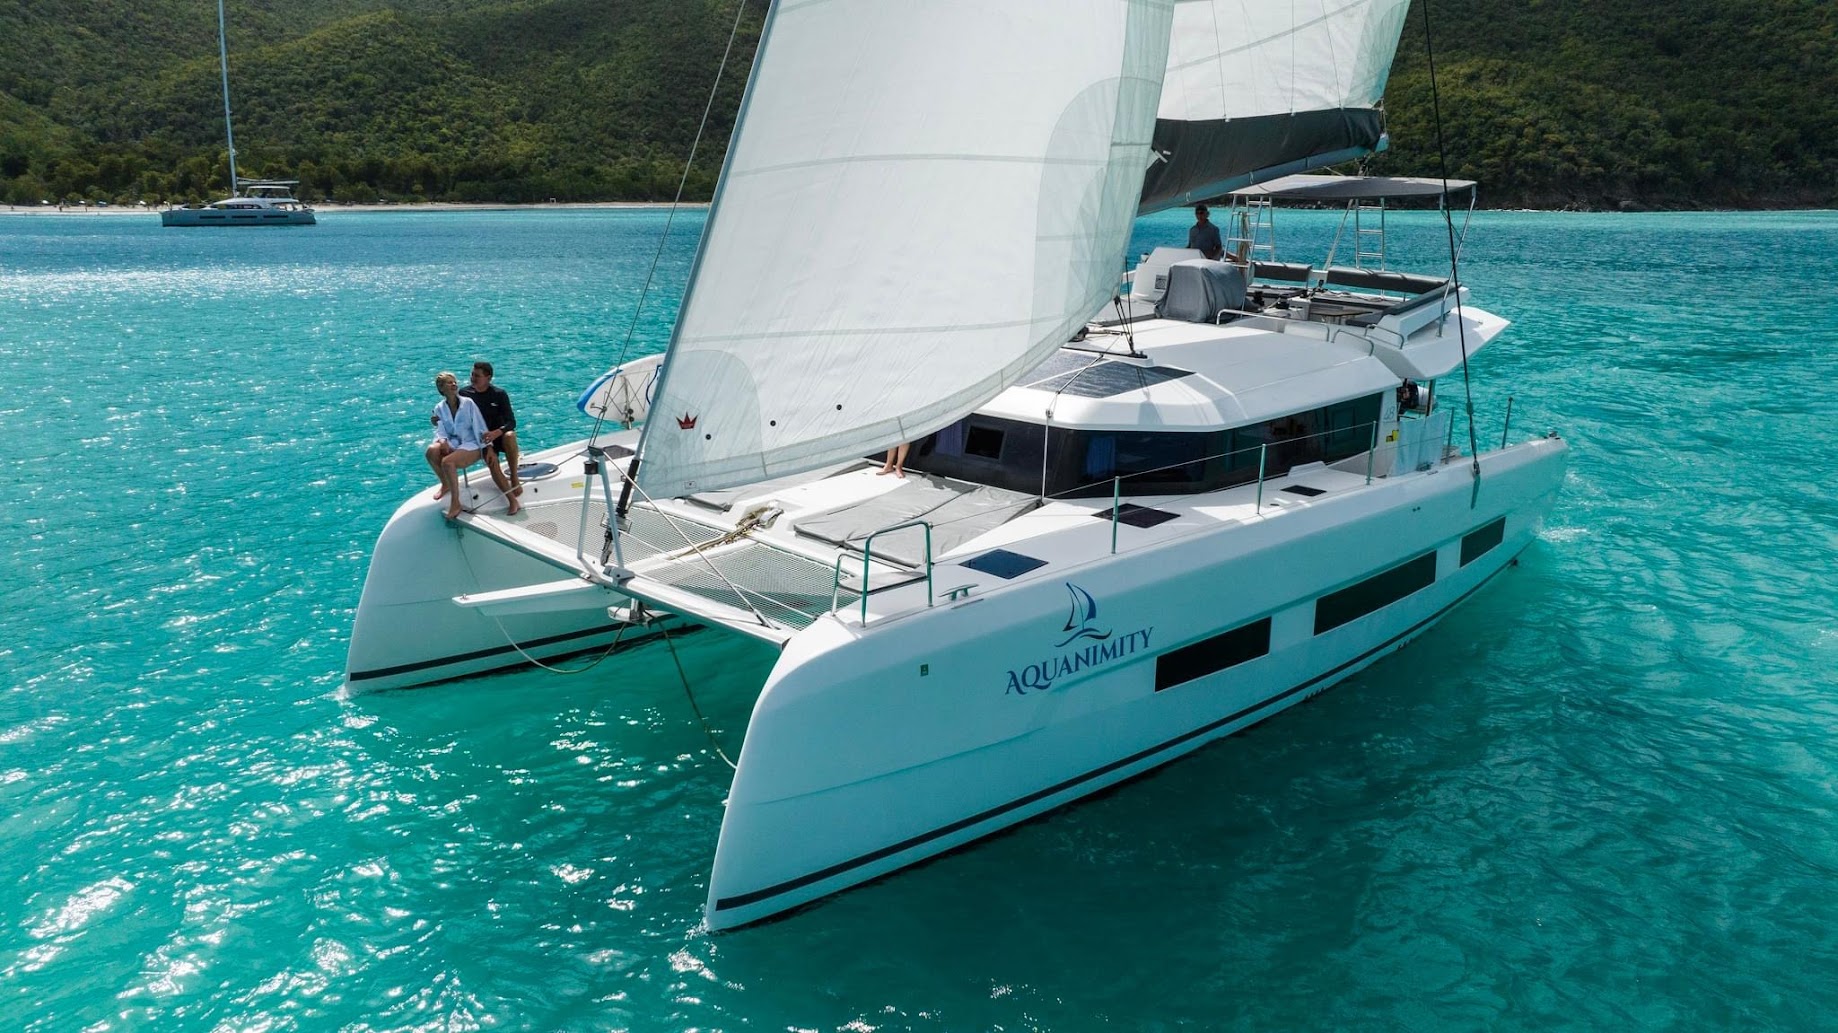 aquanimity yacht charters , virgin islands